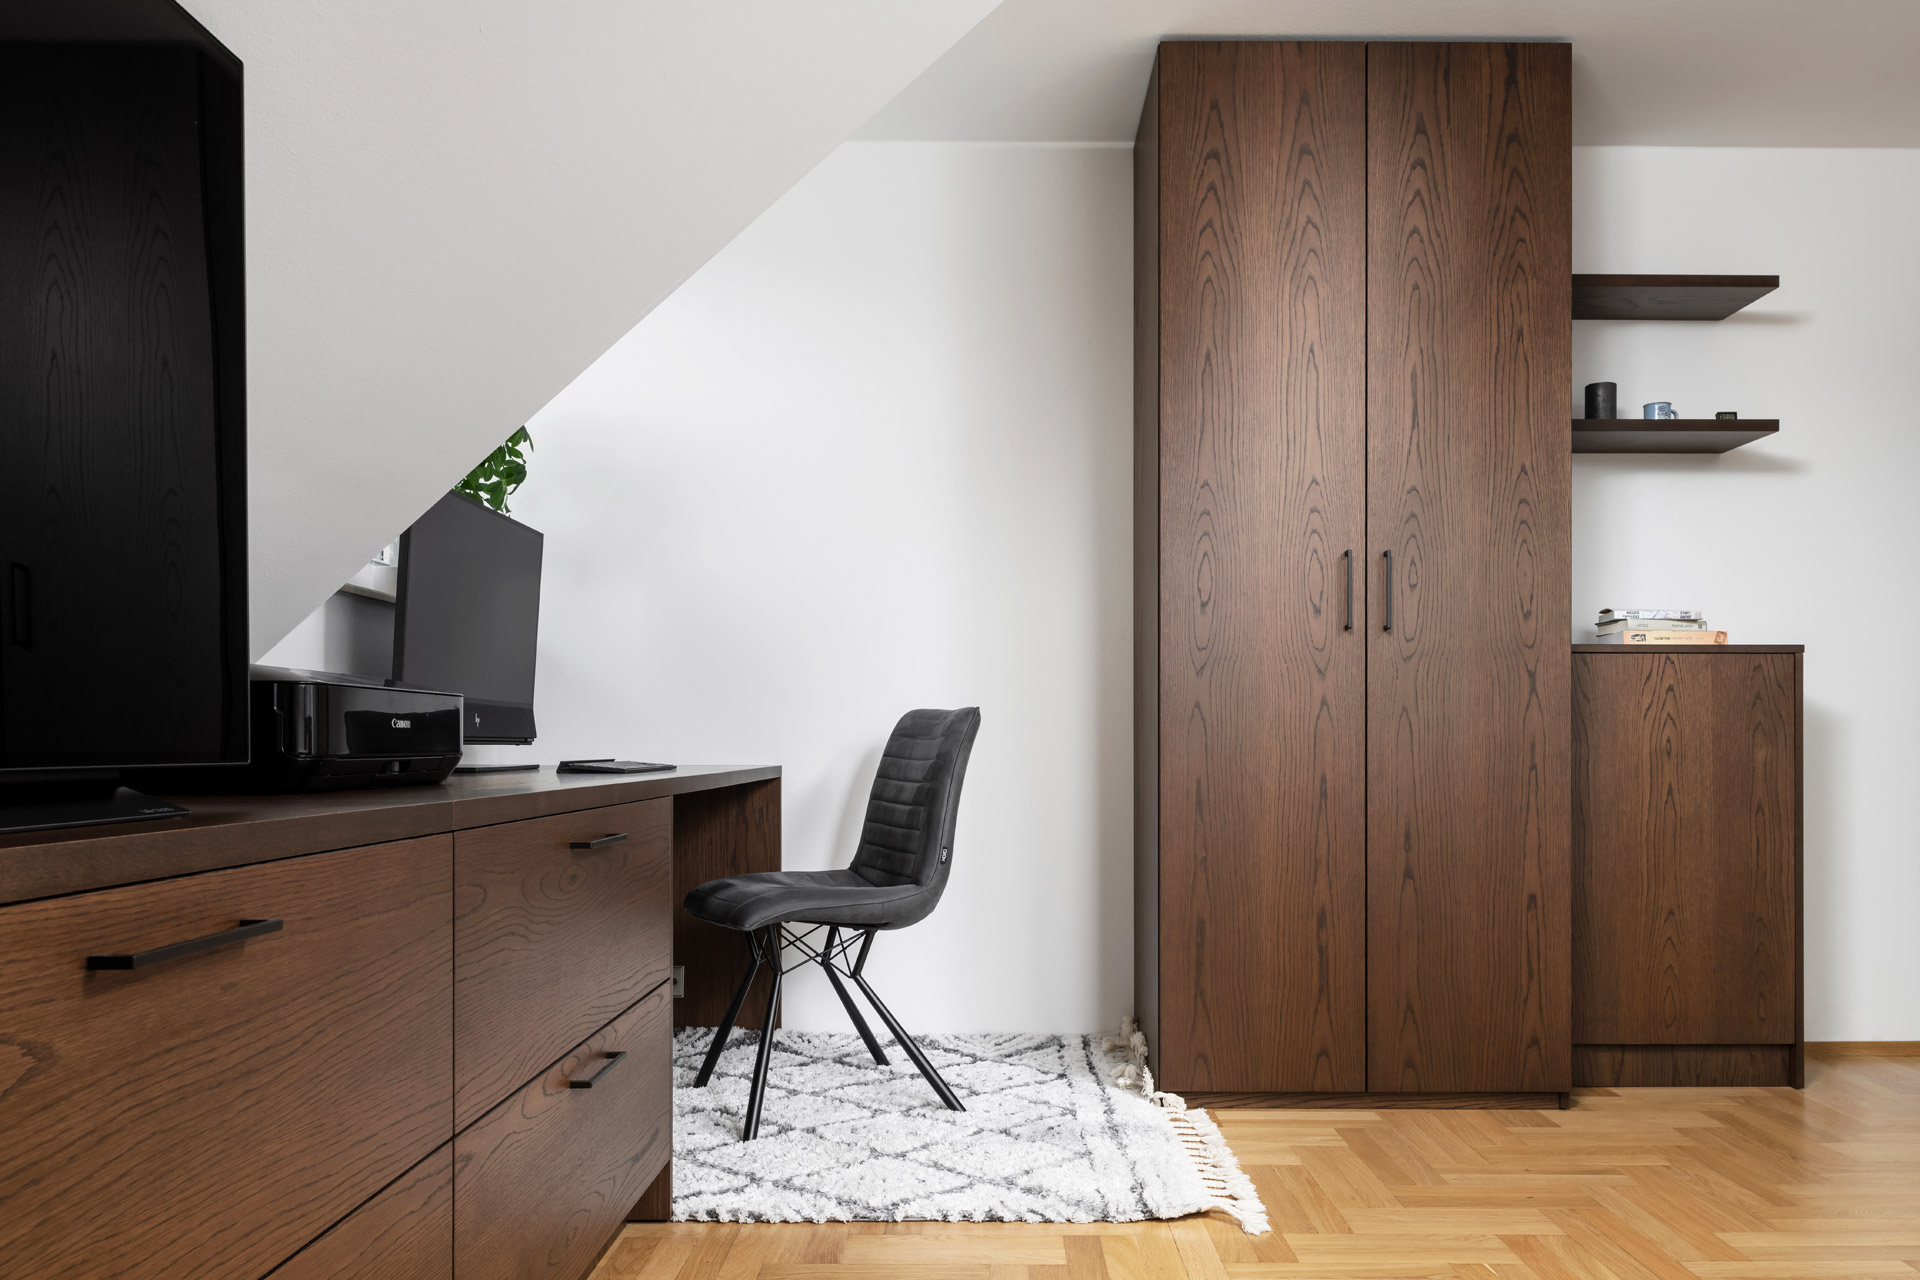 Hanák Furniture Realization of wardrobe and closet